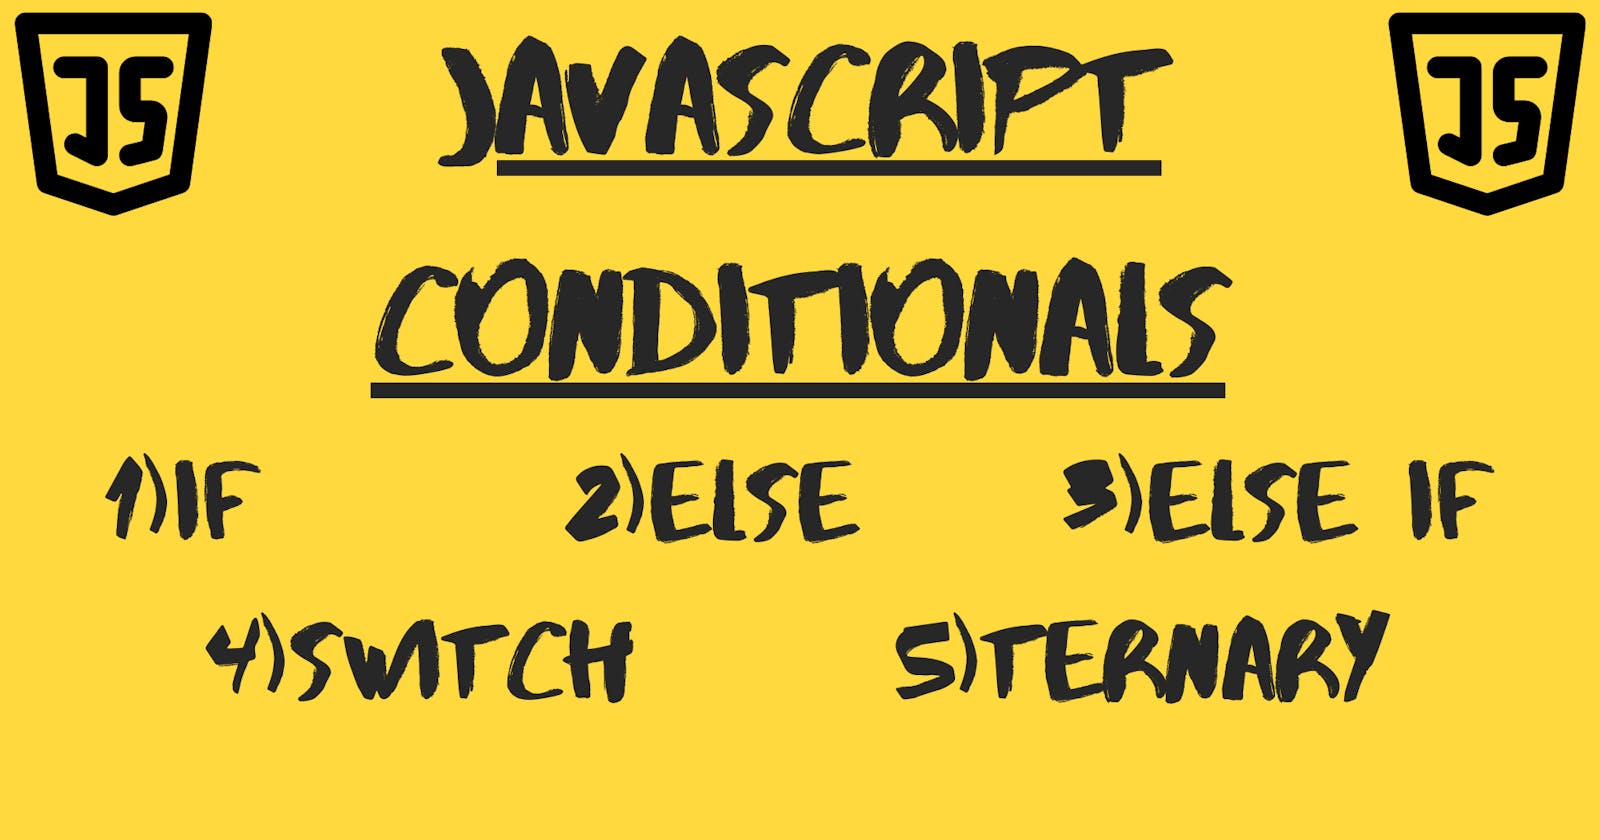 Conditionals In Javascript